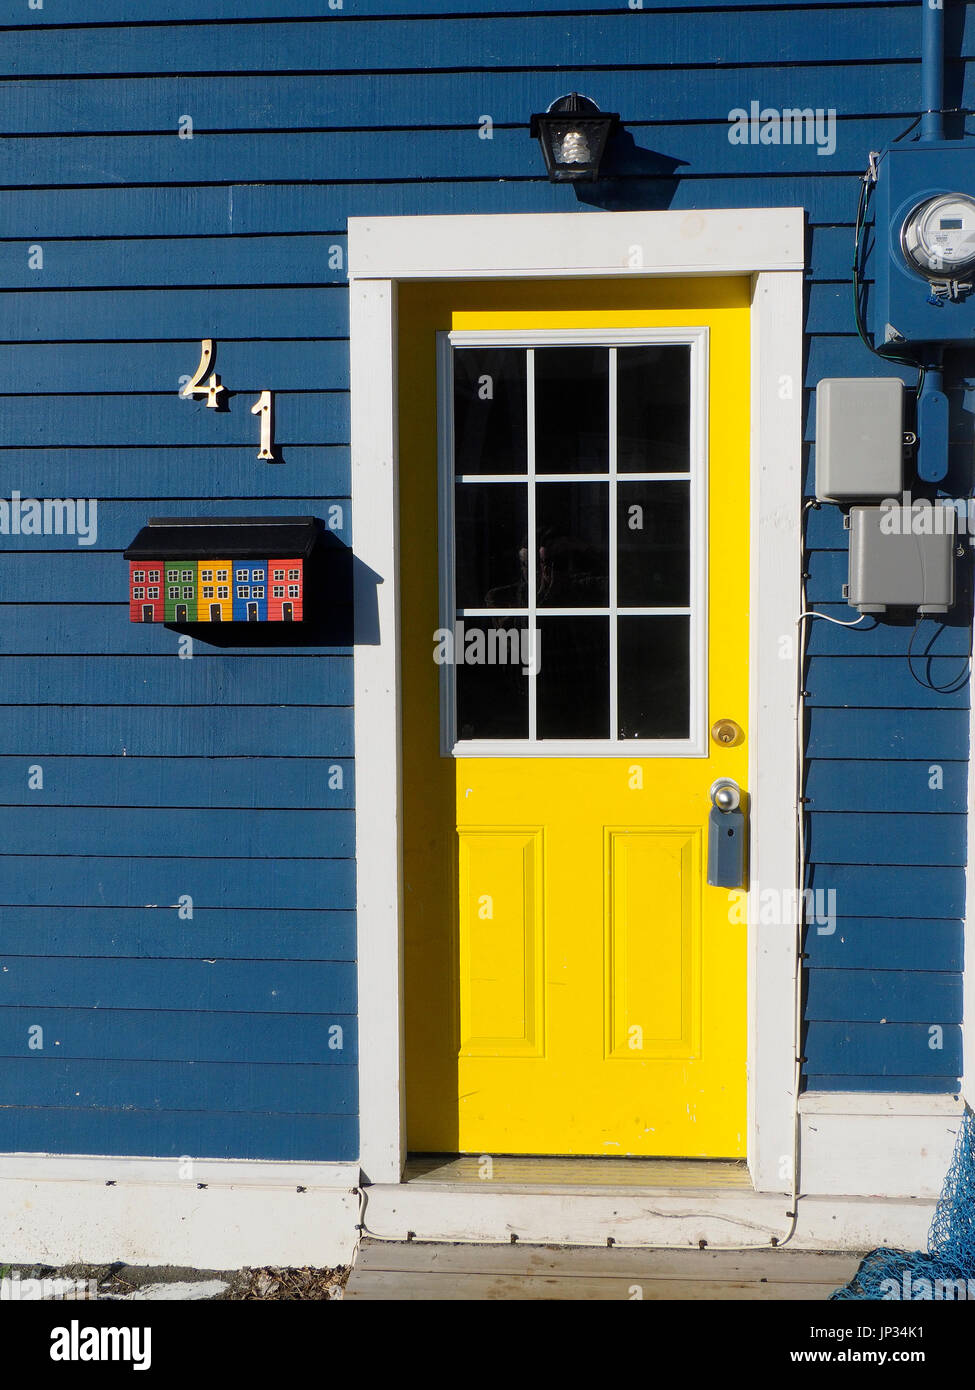 Colorful Row Houses St. John's Newfoundland Stock Photo